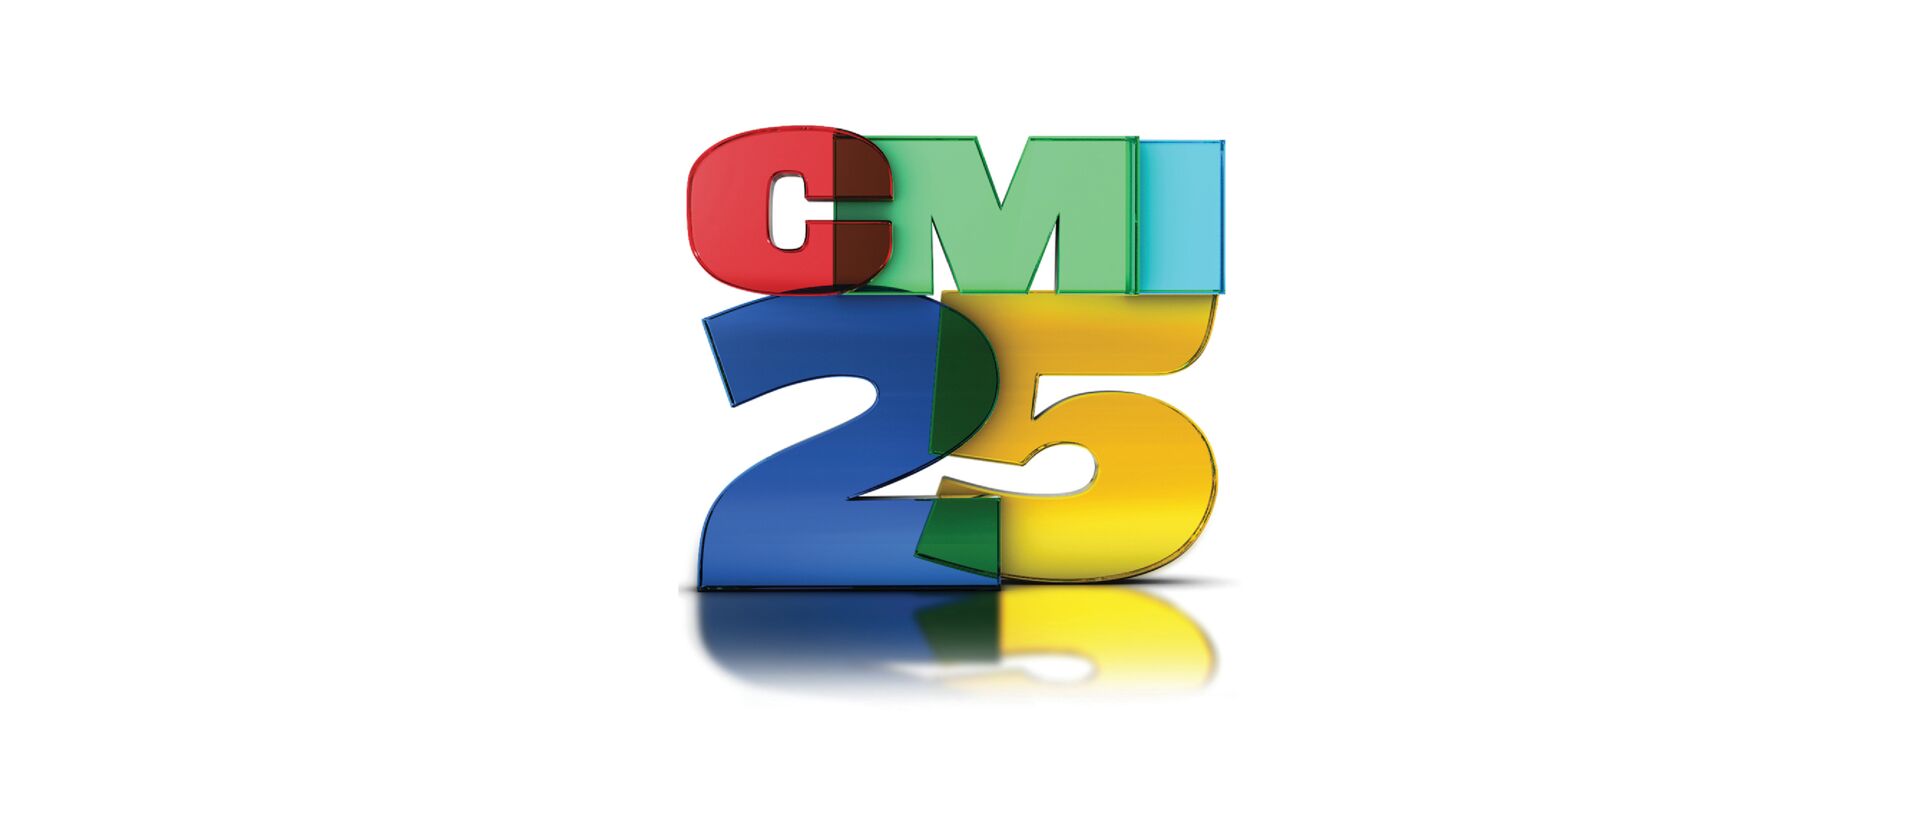 MCI USA | Named CMI's Top 25 Meeting & Incentive Company